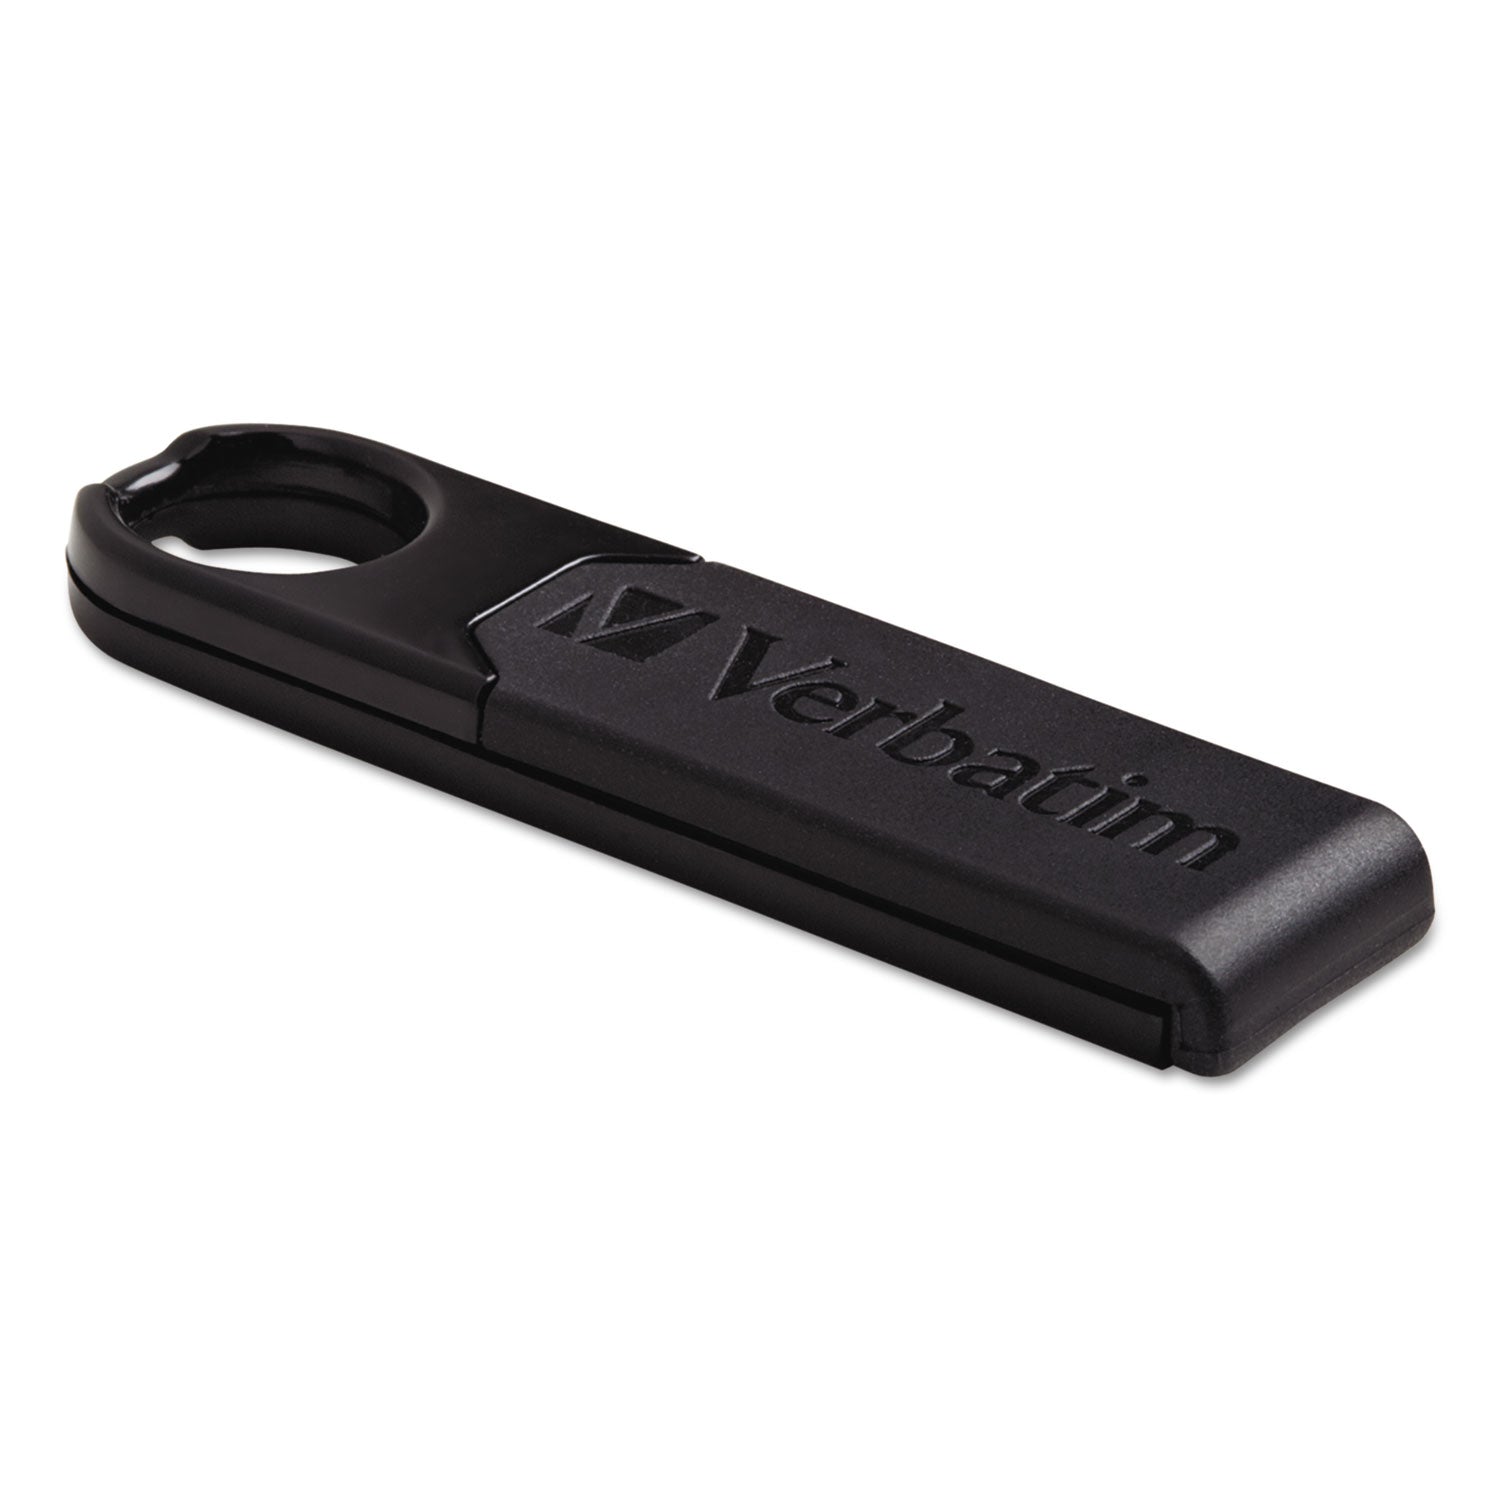 Store 'n' Go Micro USB Drive Plus, 16 GB, Black - 